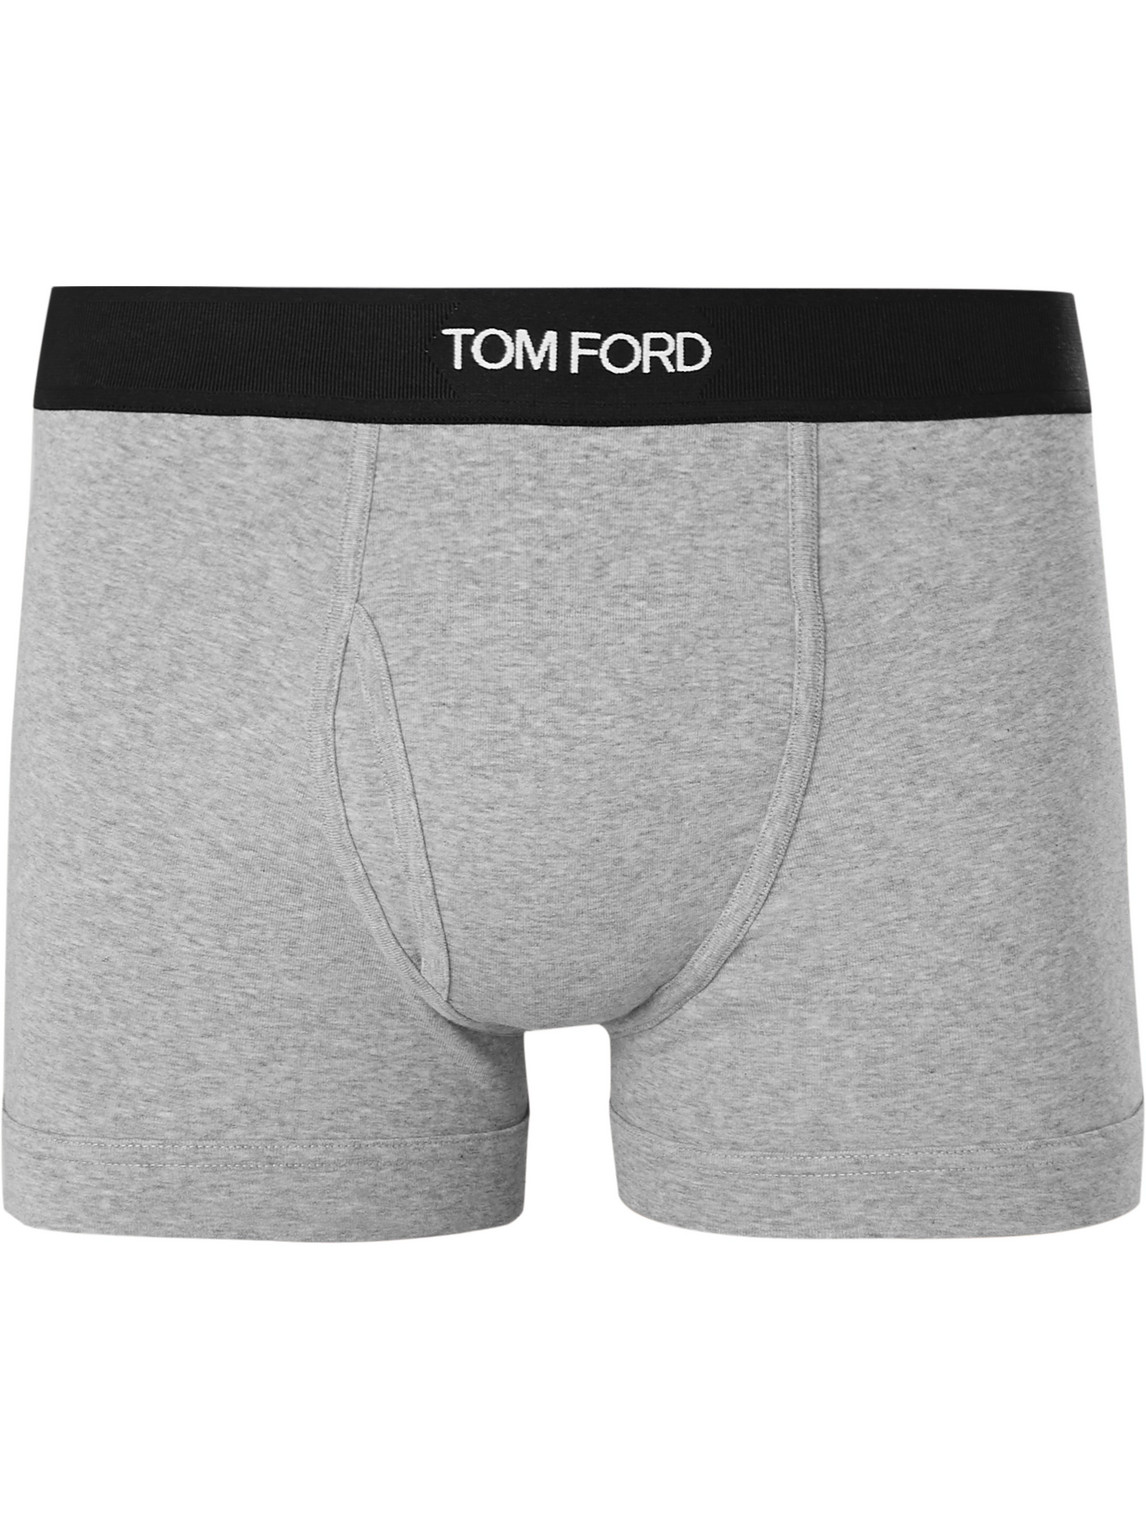 TOM FORD - Stretch-Cotton Boxer Briefs - Men - Gray - S von TOM FORD